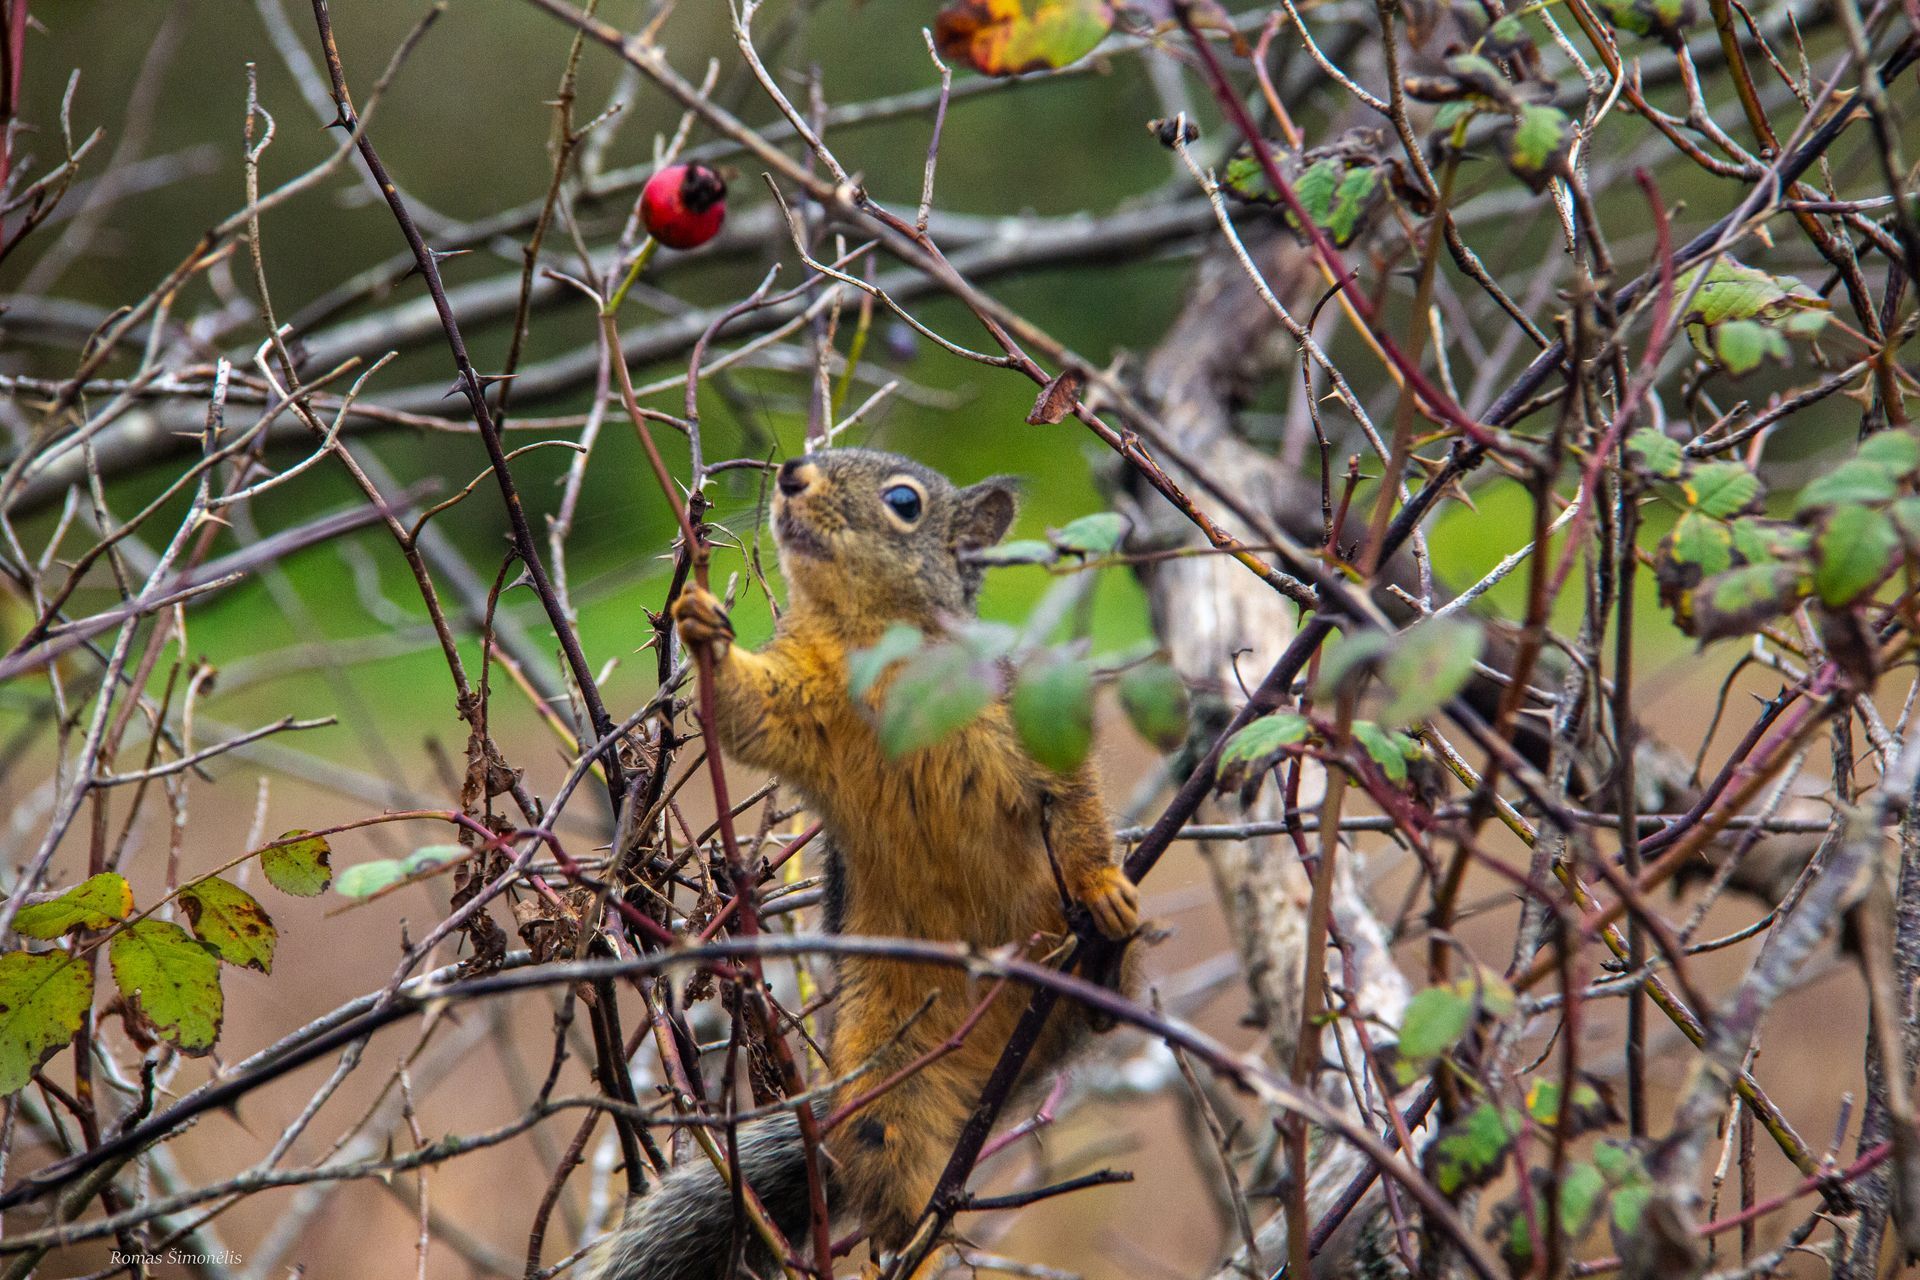 Douglas squirrel in tree.
